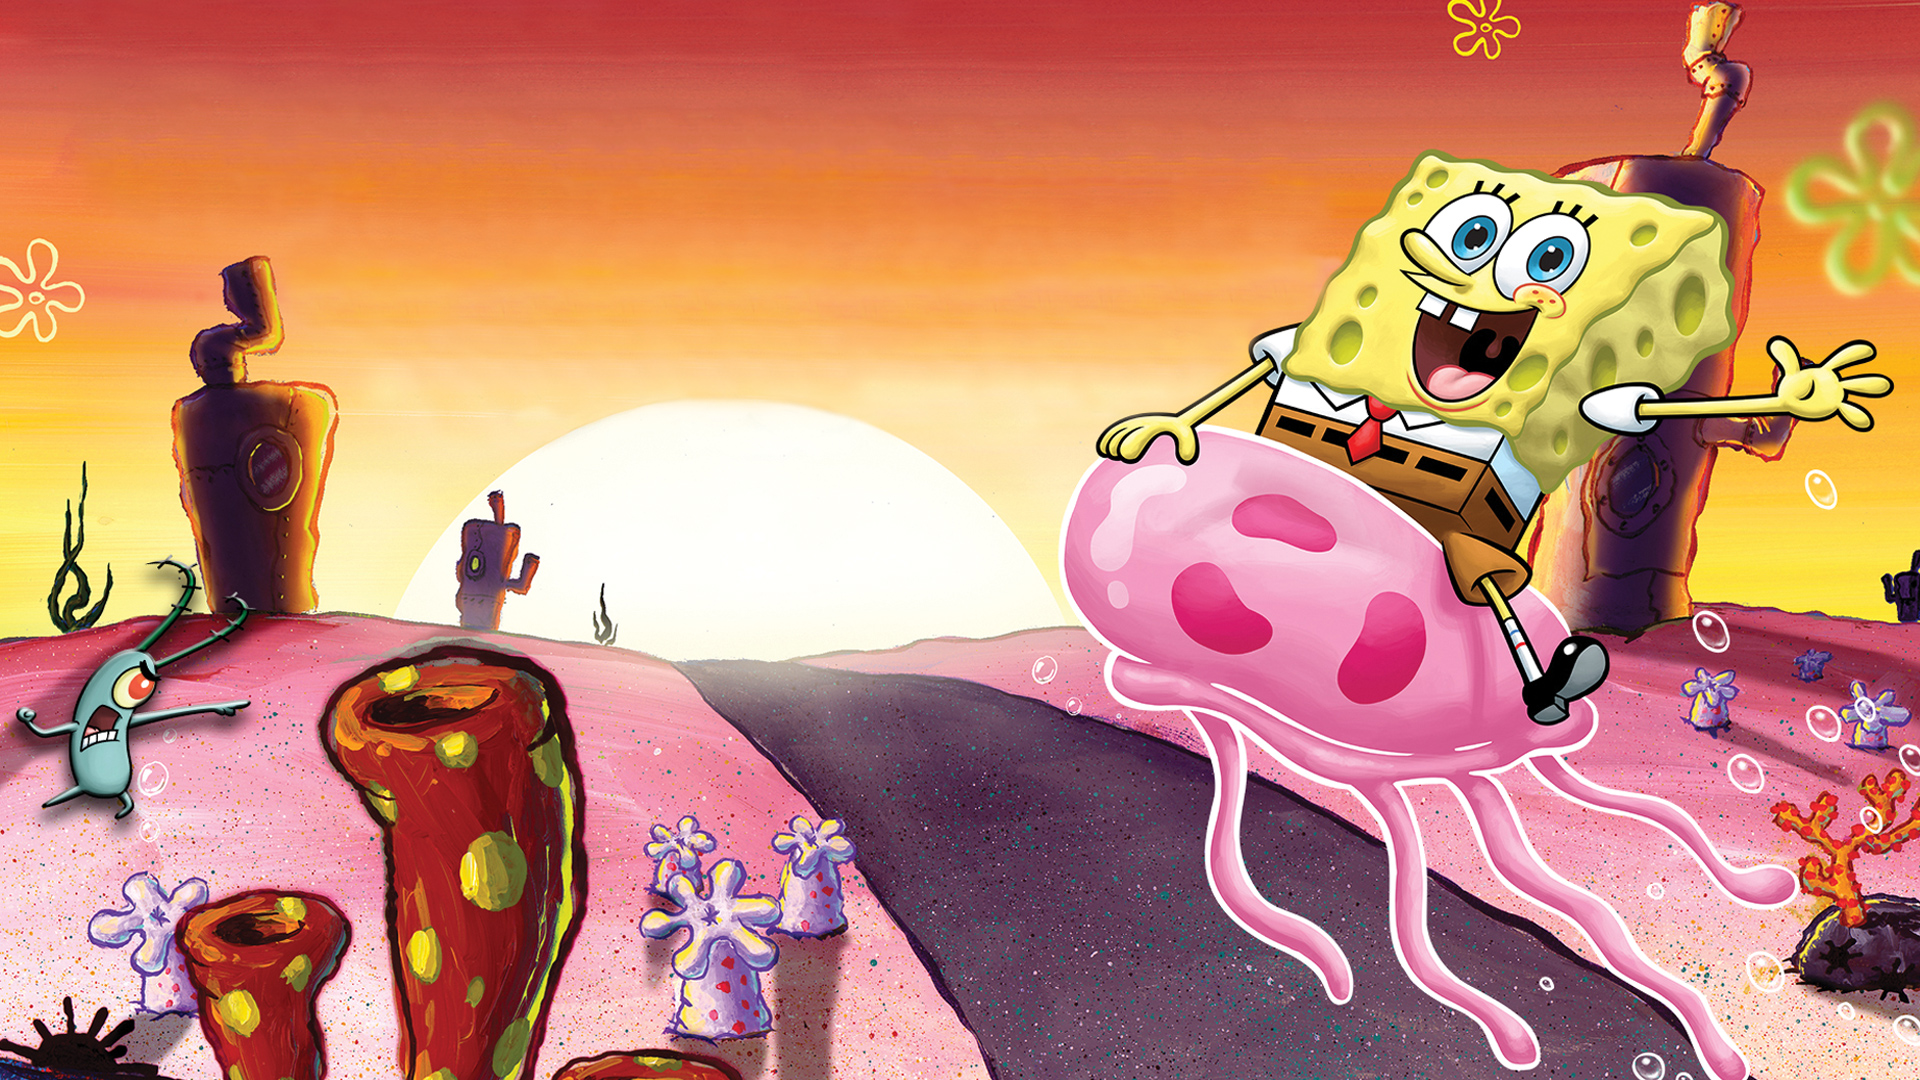 spongebob squarepants full episodes